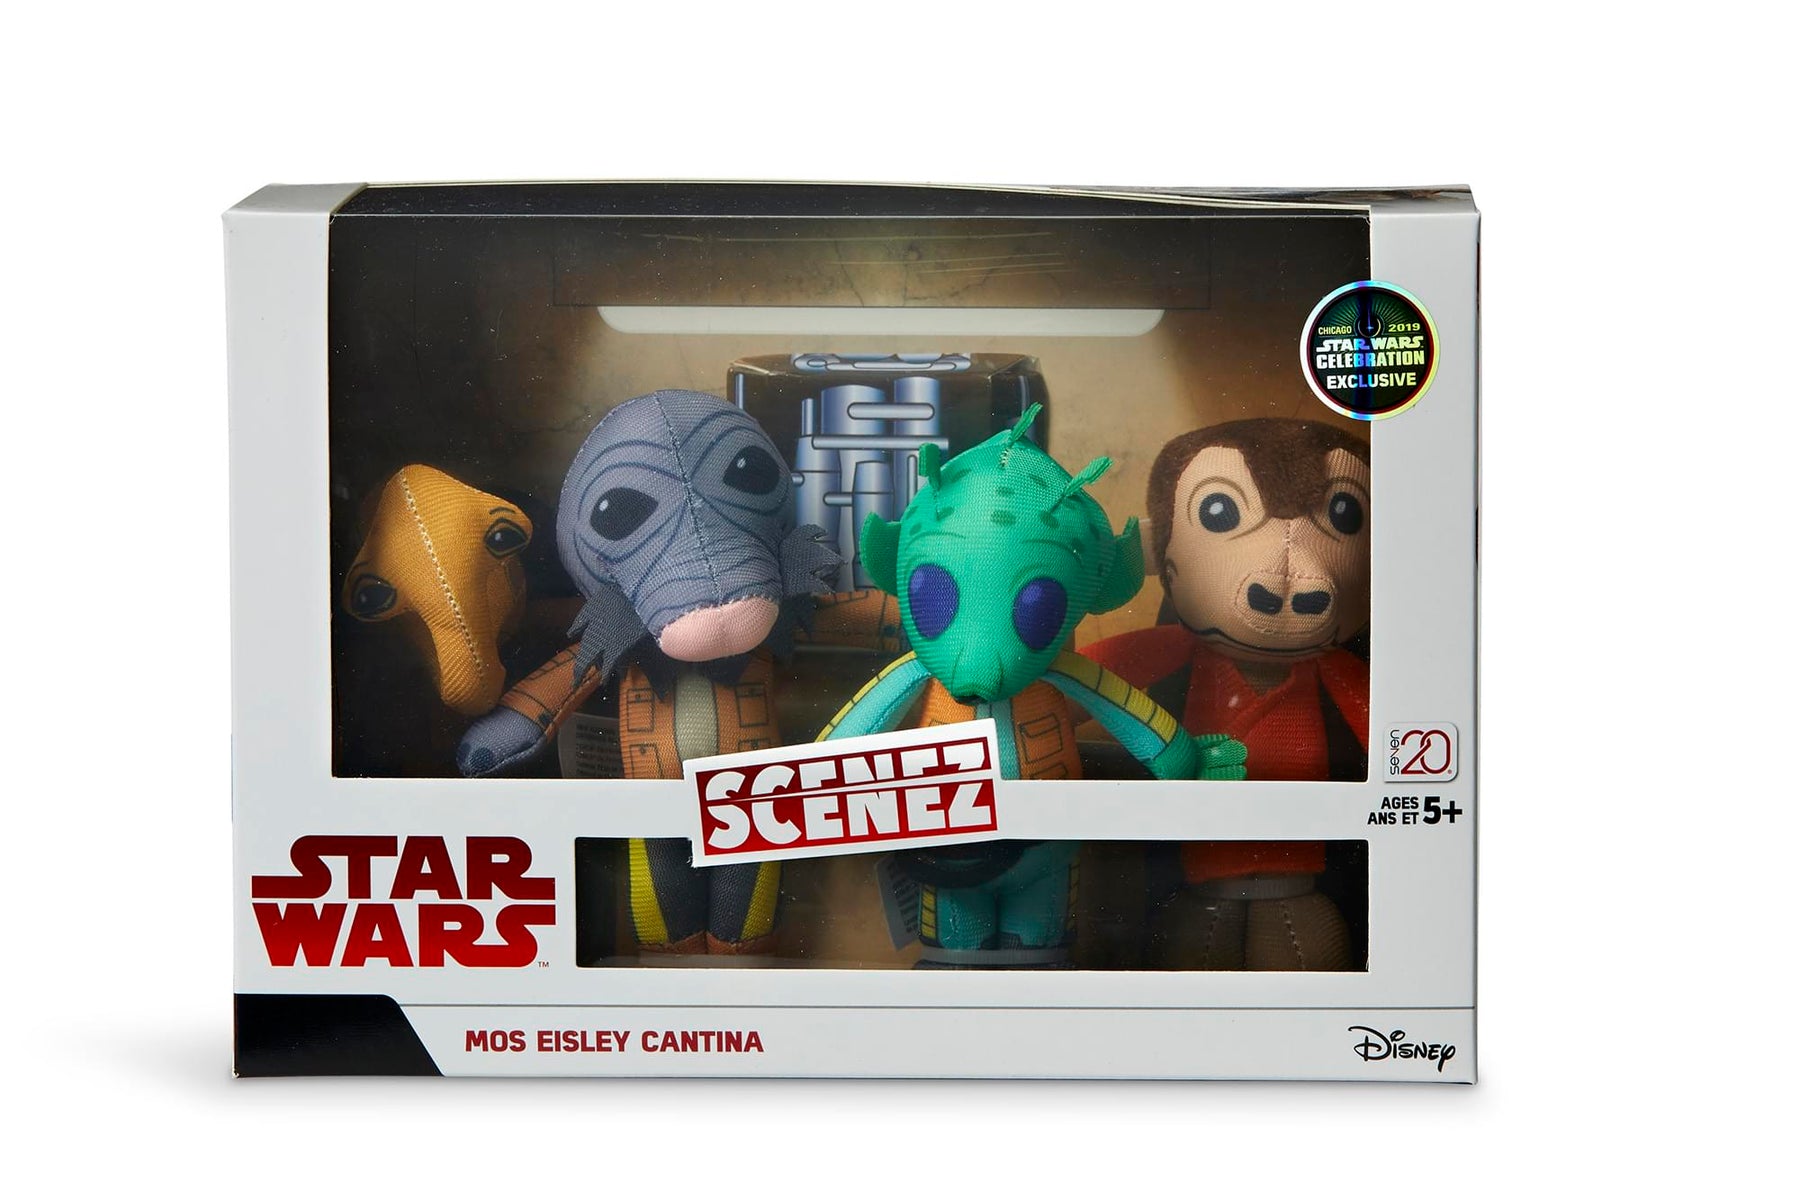 Star Wars Exclusive Mini Plushies - Mos Eisley’s Cantina Villains - 4 Pack